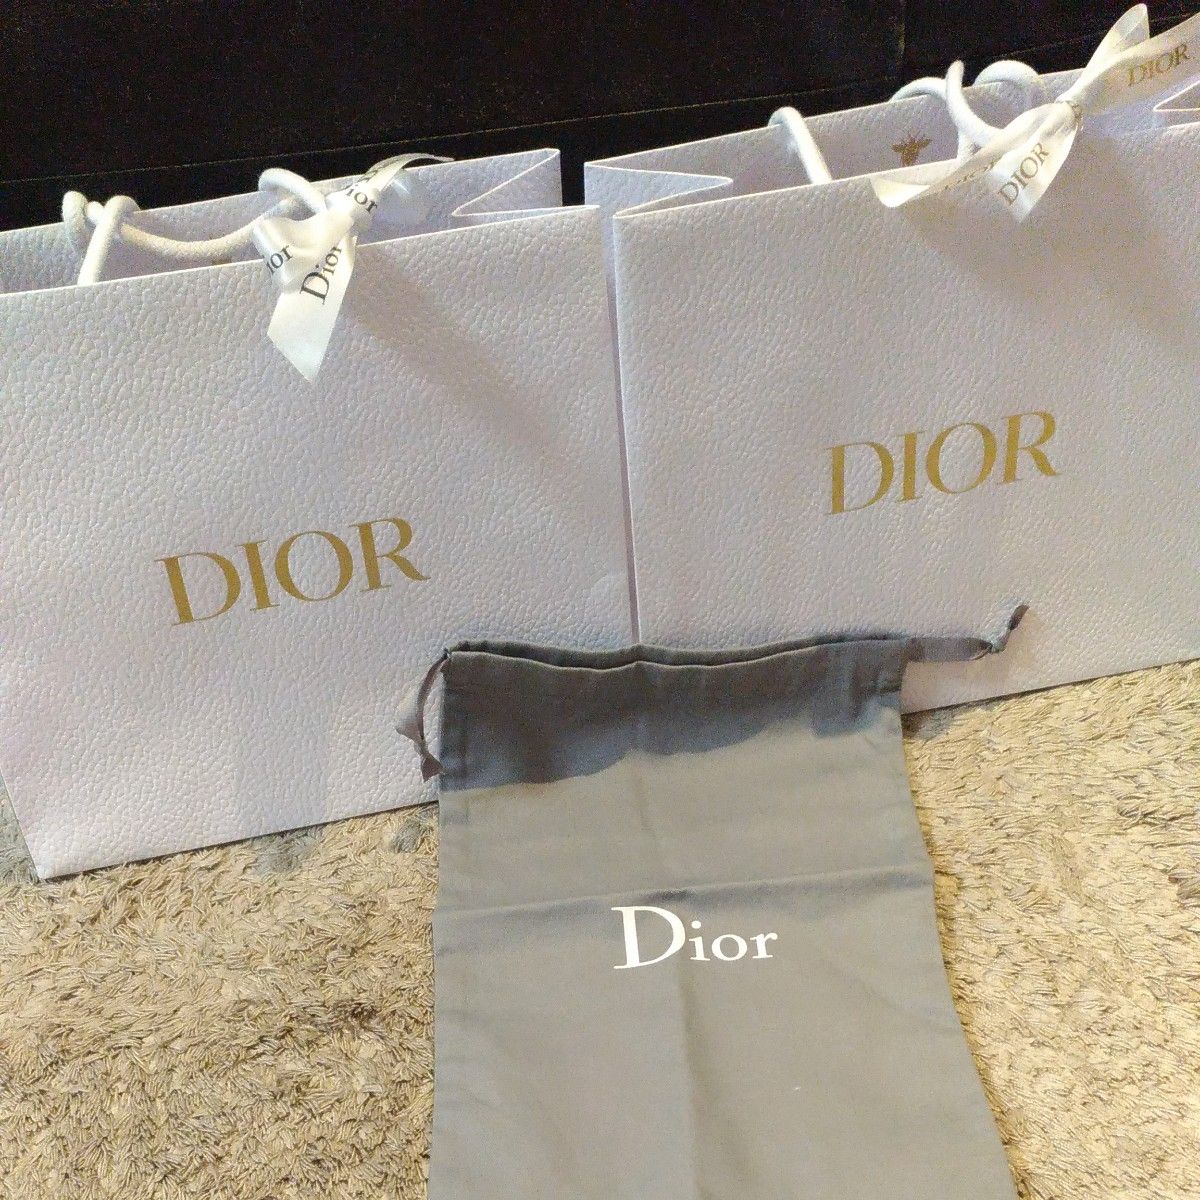 Dior ショッパー グレー巾着袋 セット  紙袋 ショップ袋